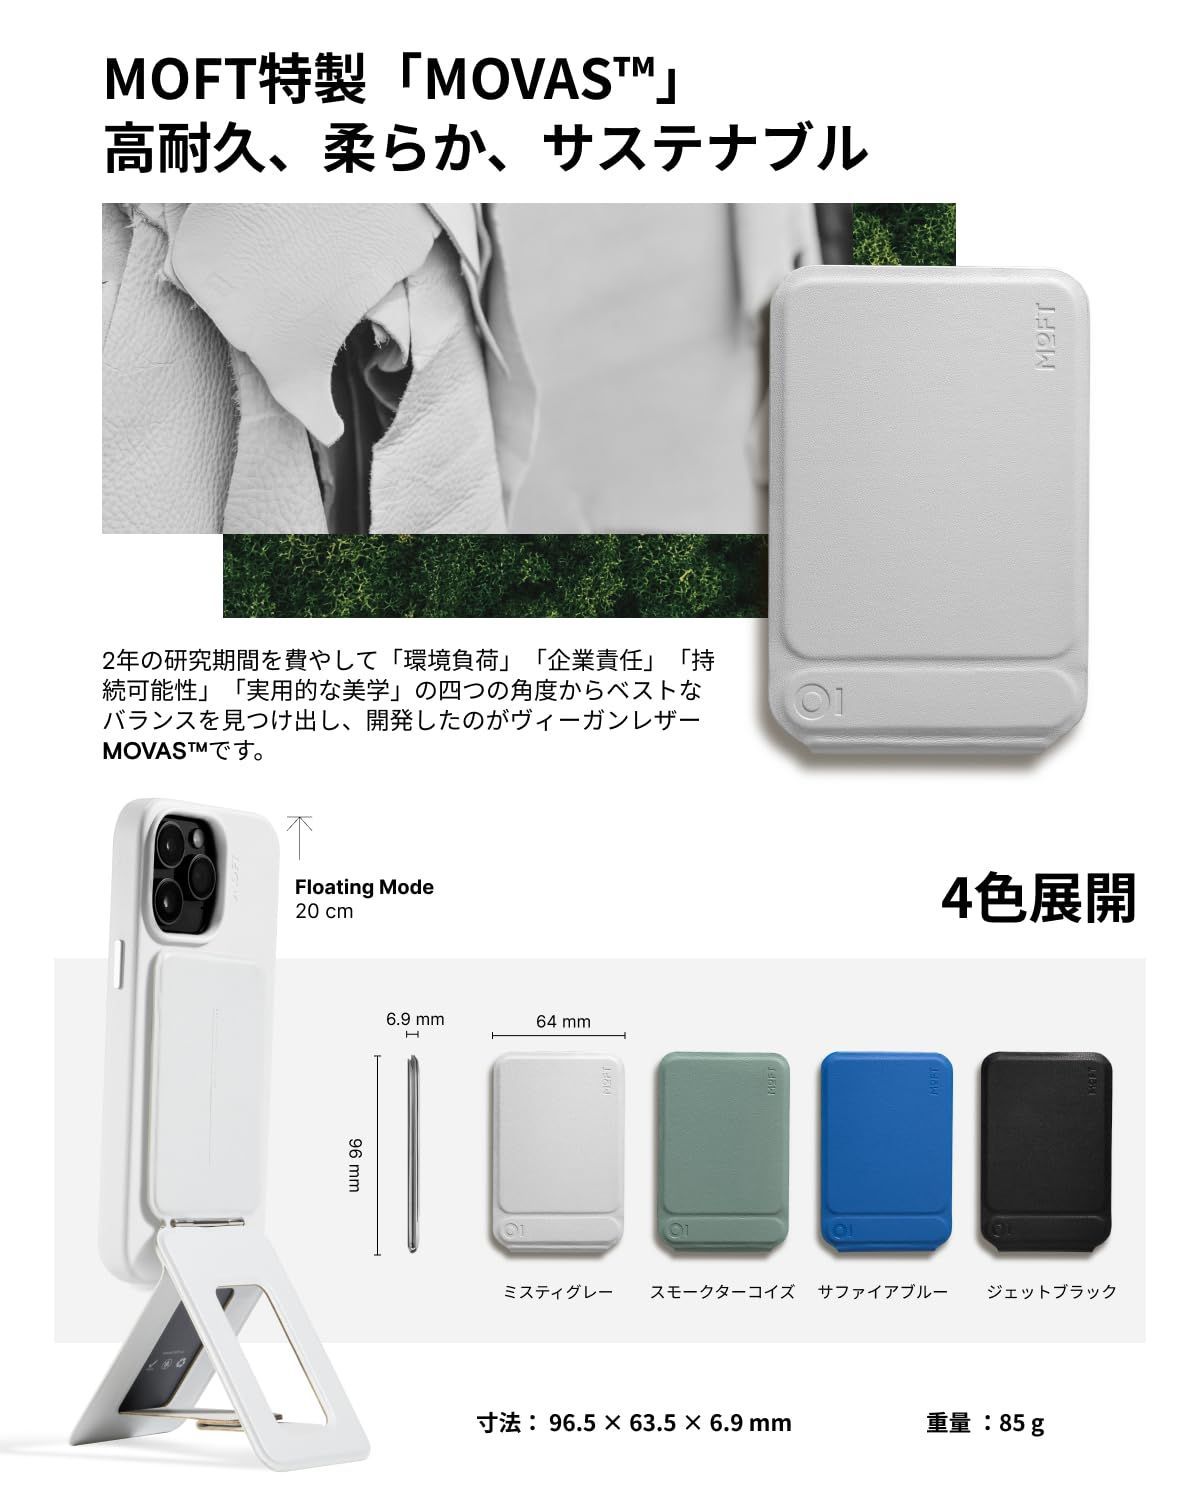 MOFT公式直営店 七変化マルチスタンド MOVAS™素材 iPhone 151 - メルカリ